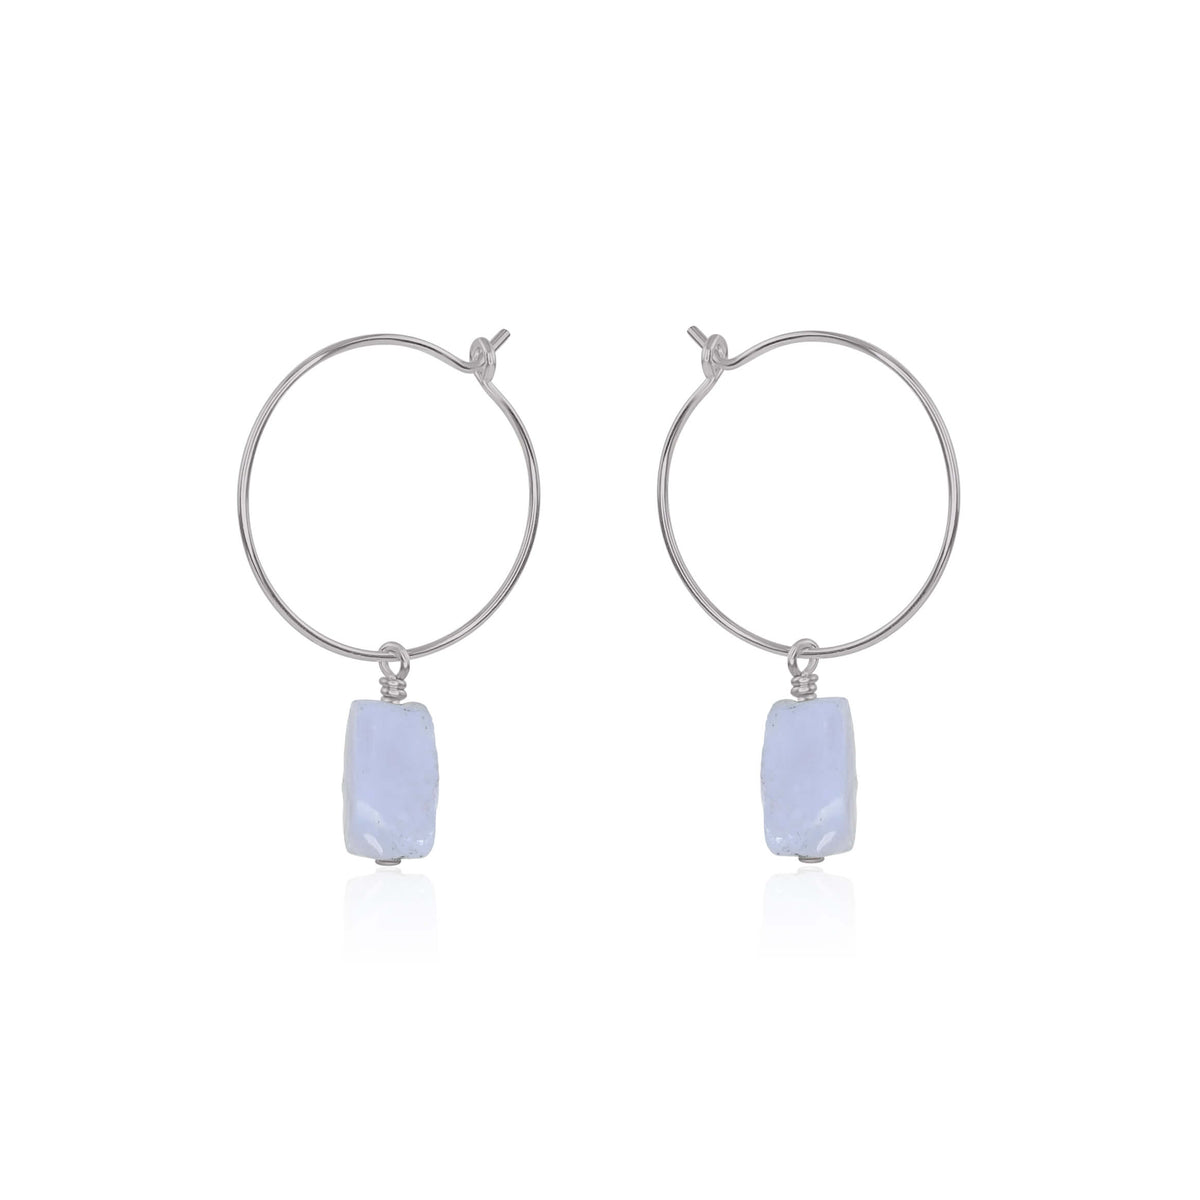 Raw Nugget Hoop Earrings - Blue Lace Agate - Stainless Steel - Luna Tide Handmade Jewellery